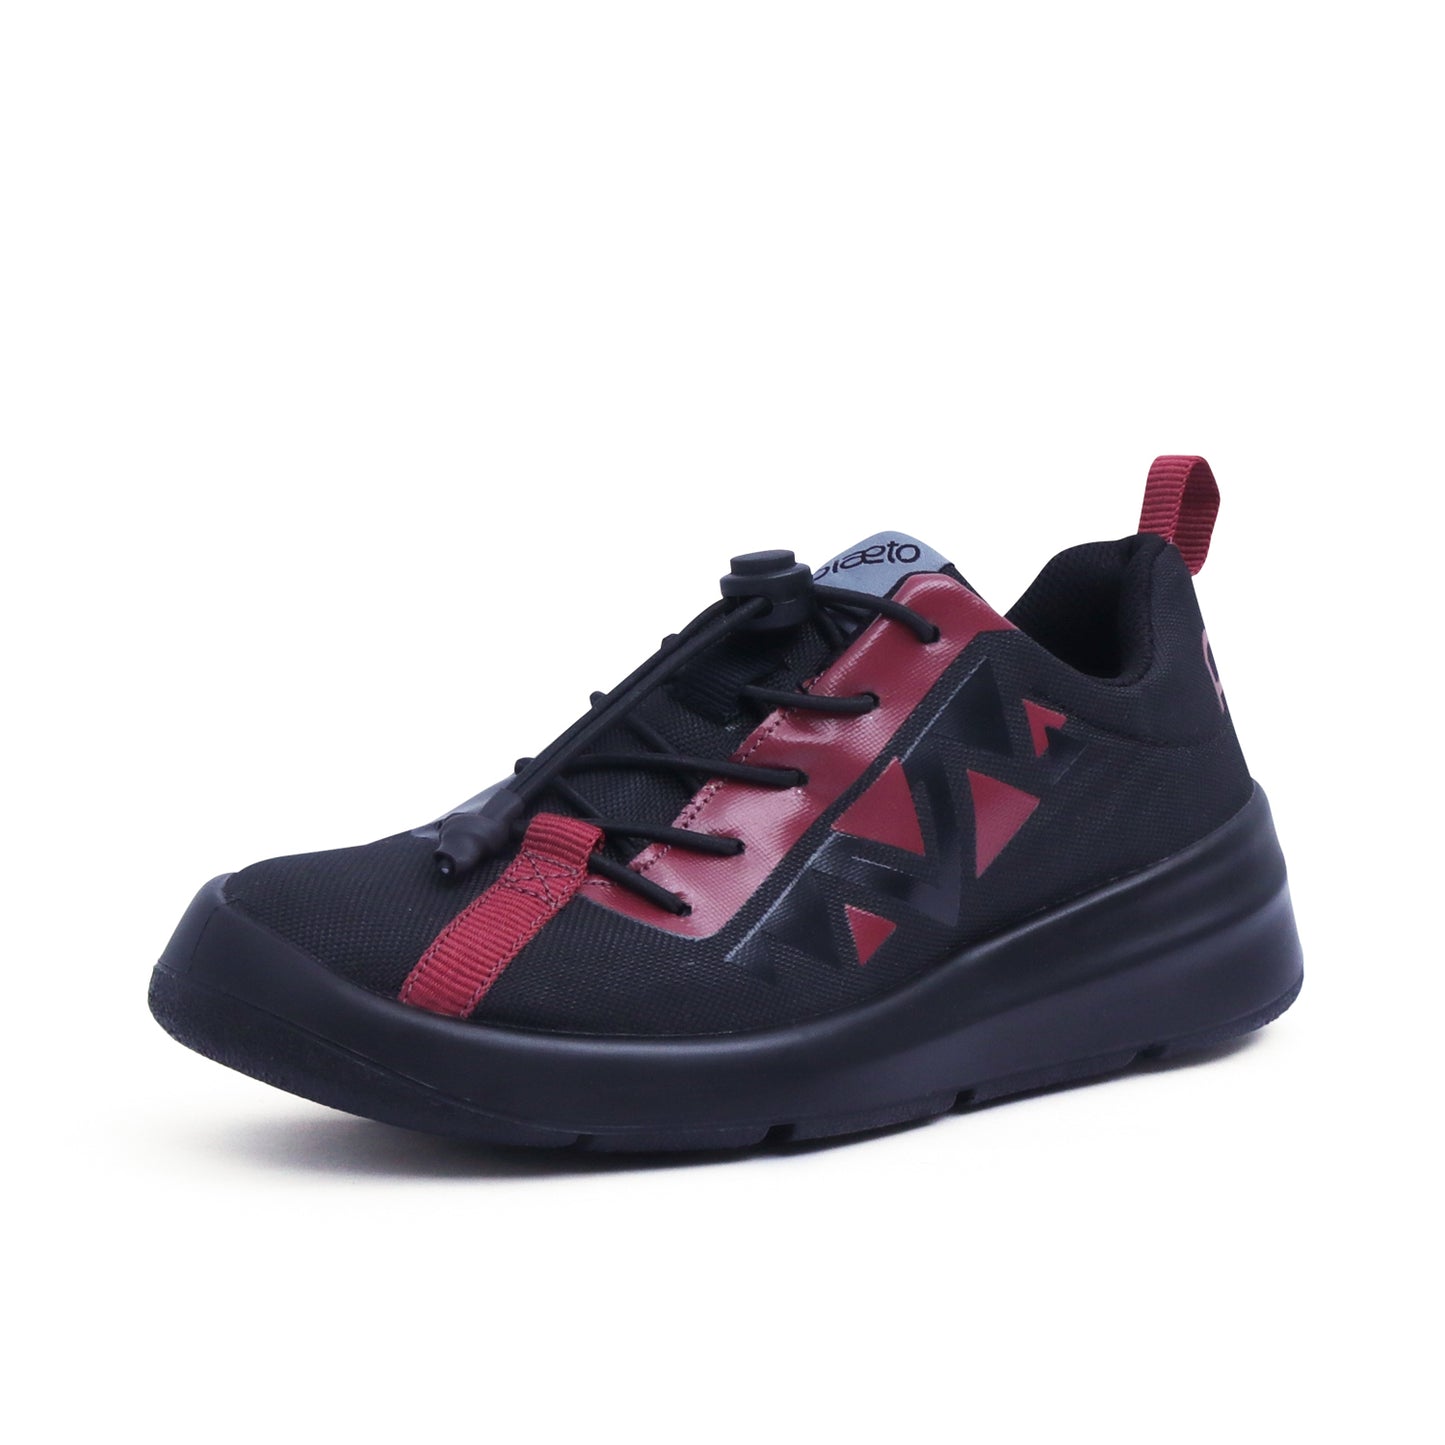 Kollide Kids Multiplay Sports Shoes - Black / Red